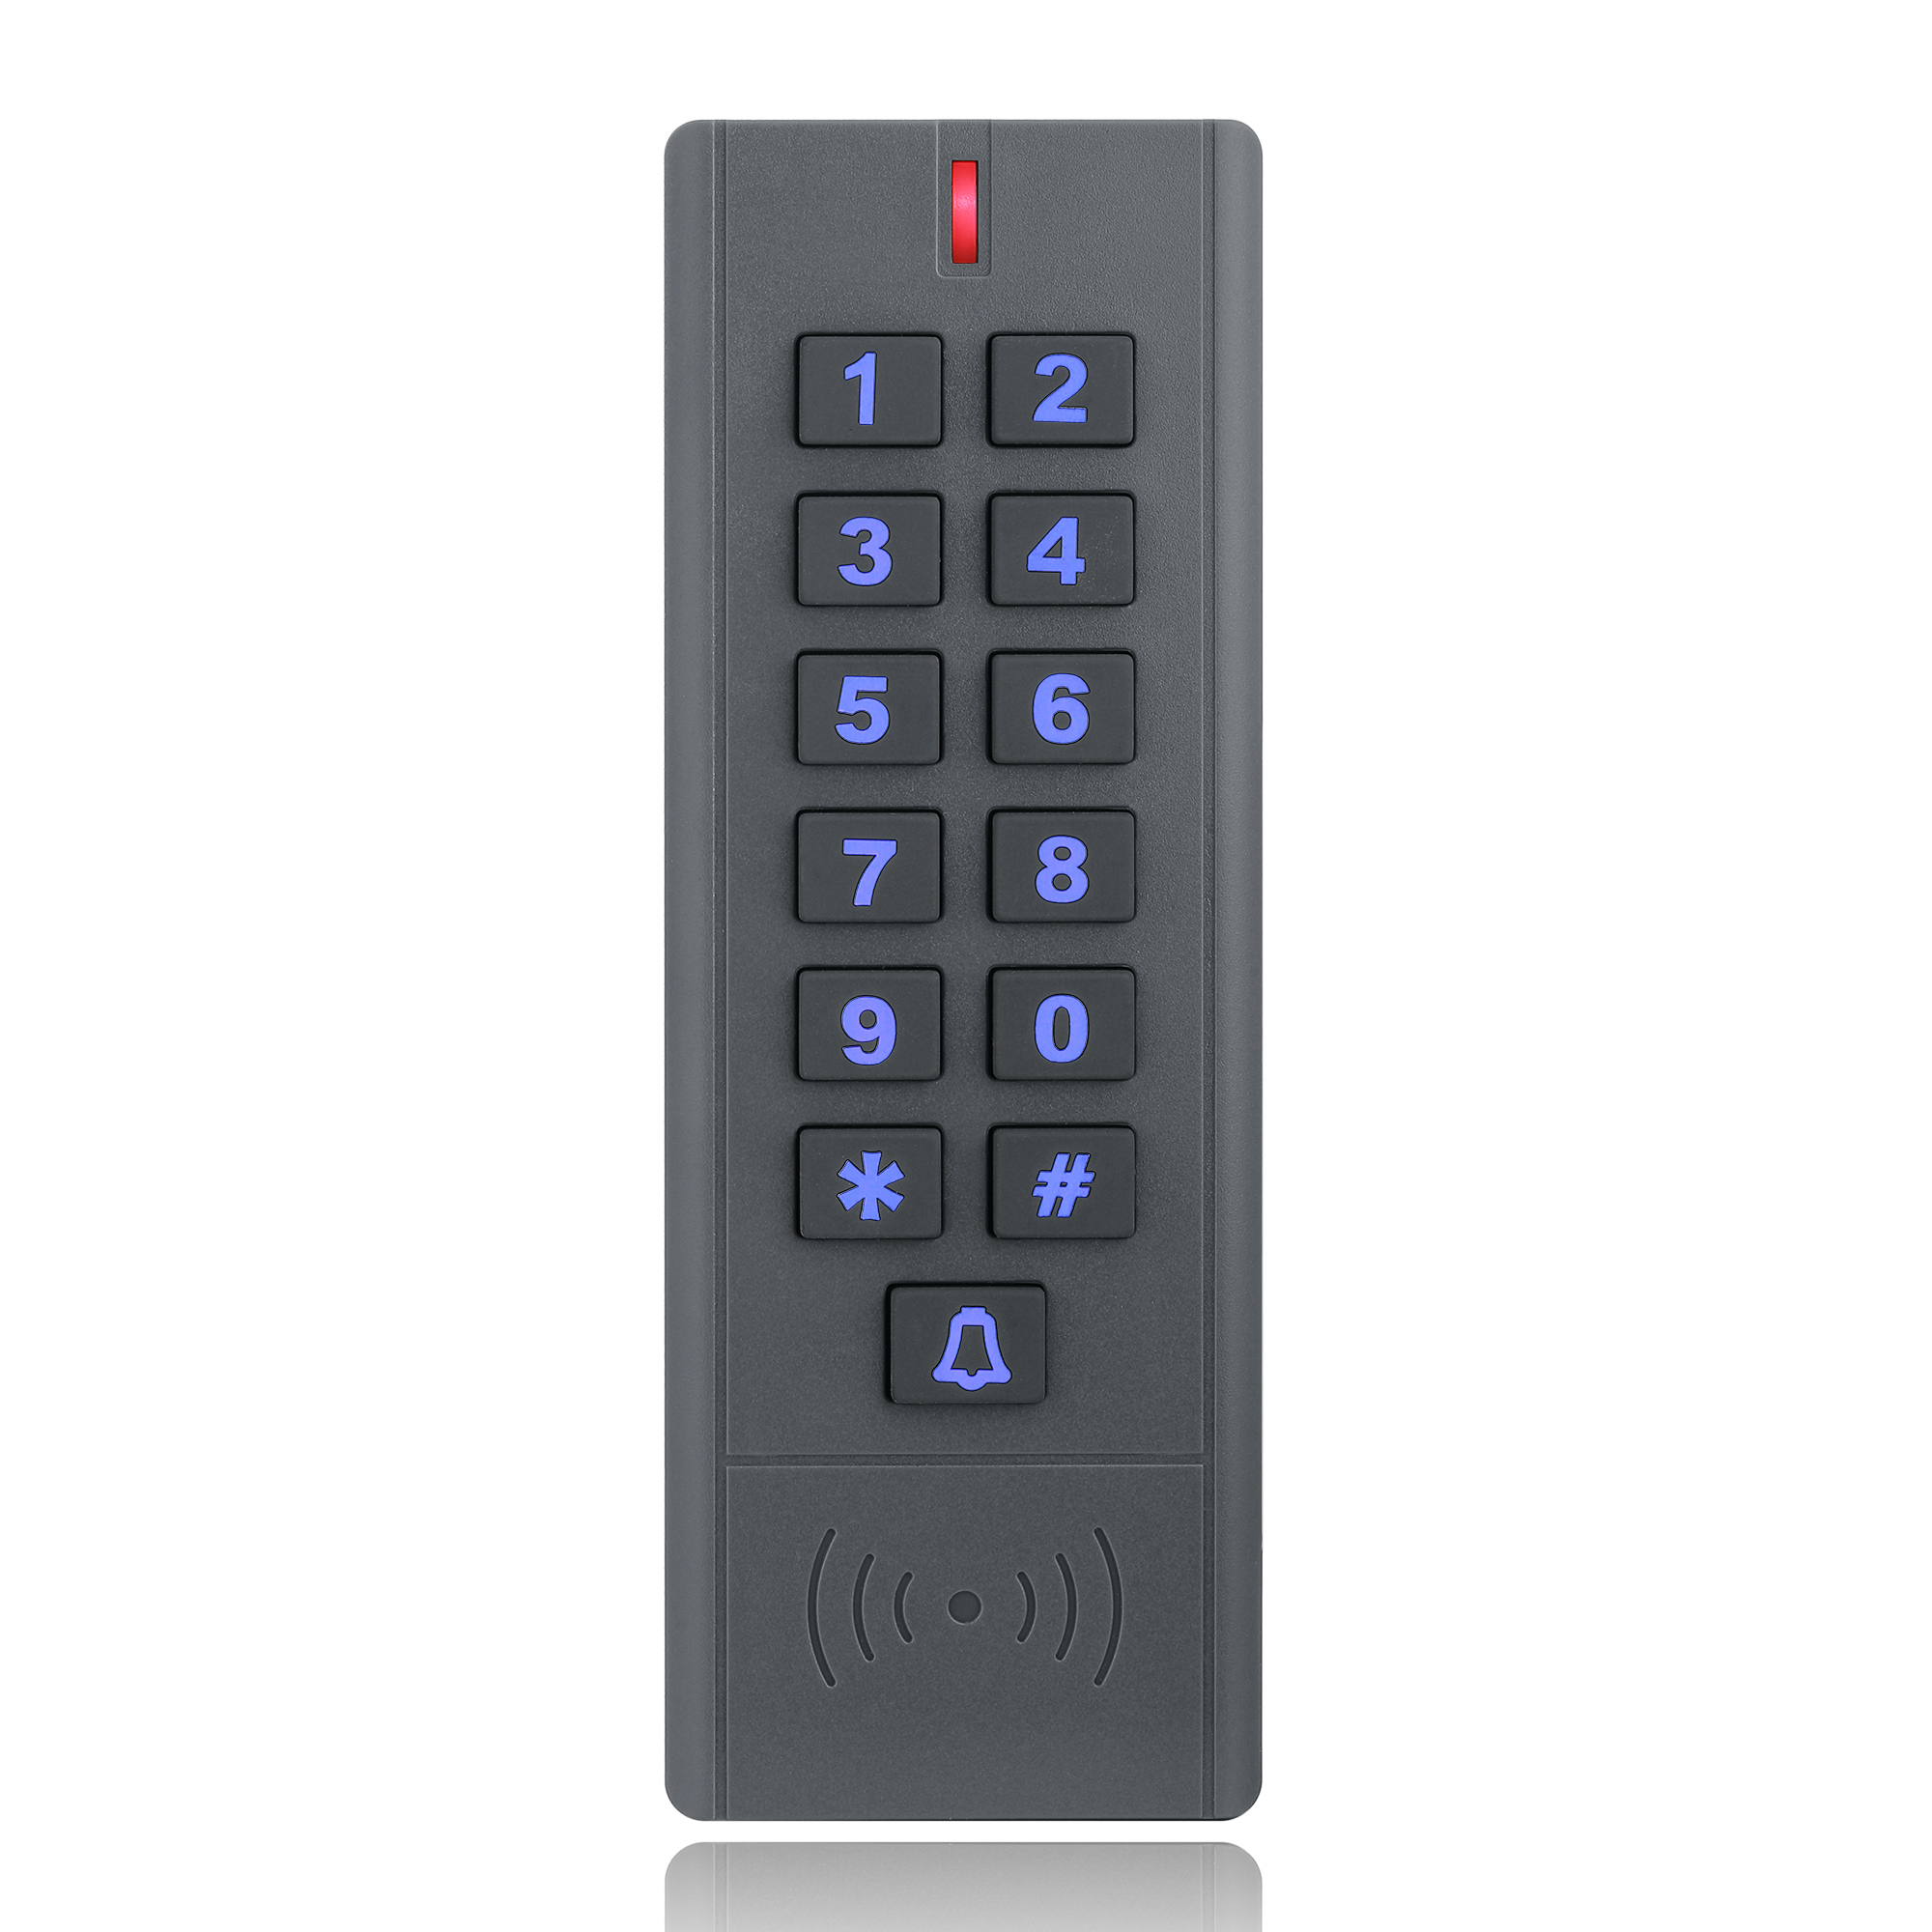 Standalone Access Control/RFID Door Keypads